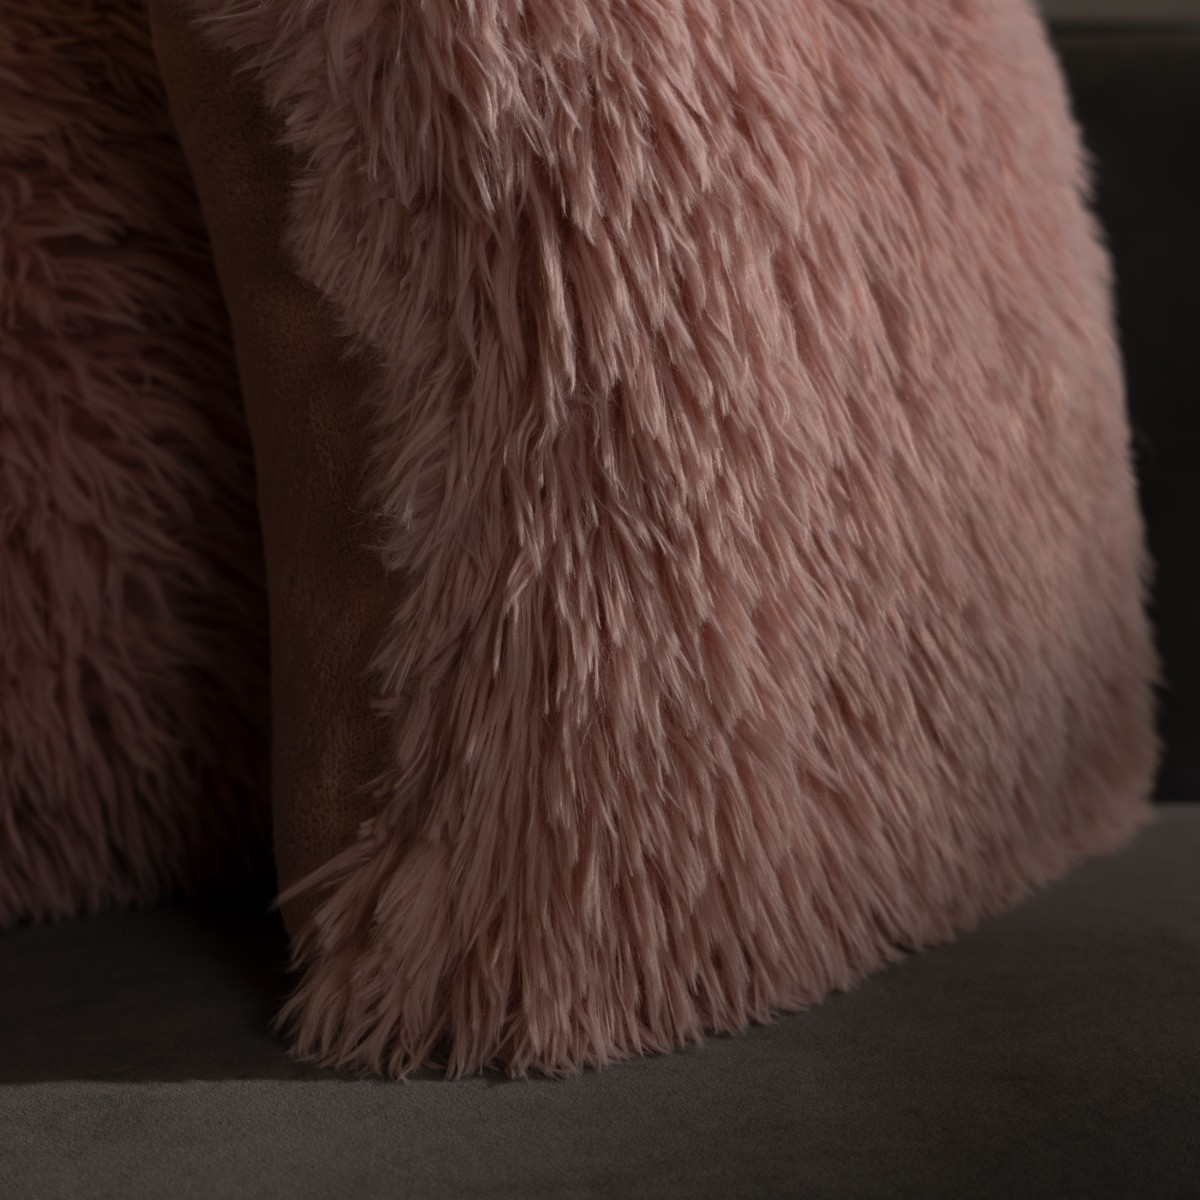 Sienna Luxury Faux Mongolian Fur Cushion Covers - Blush>